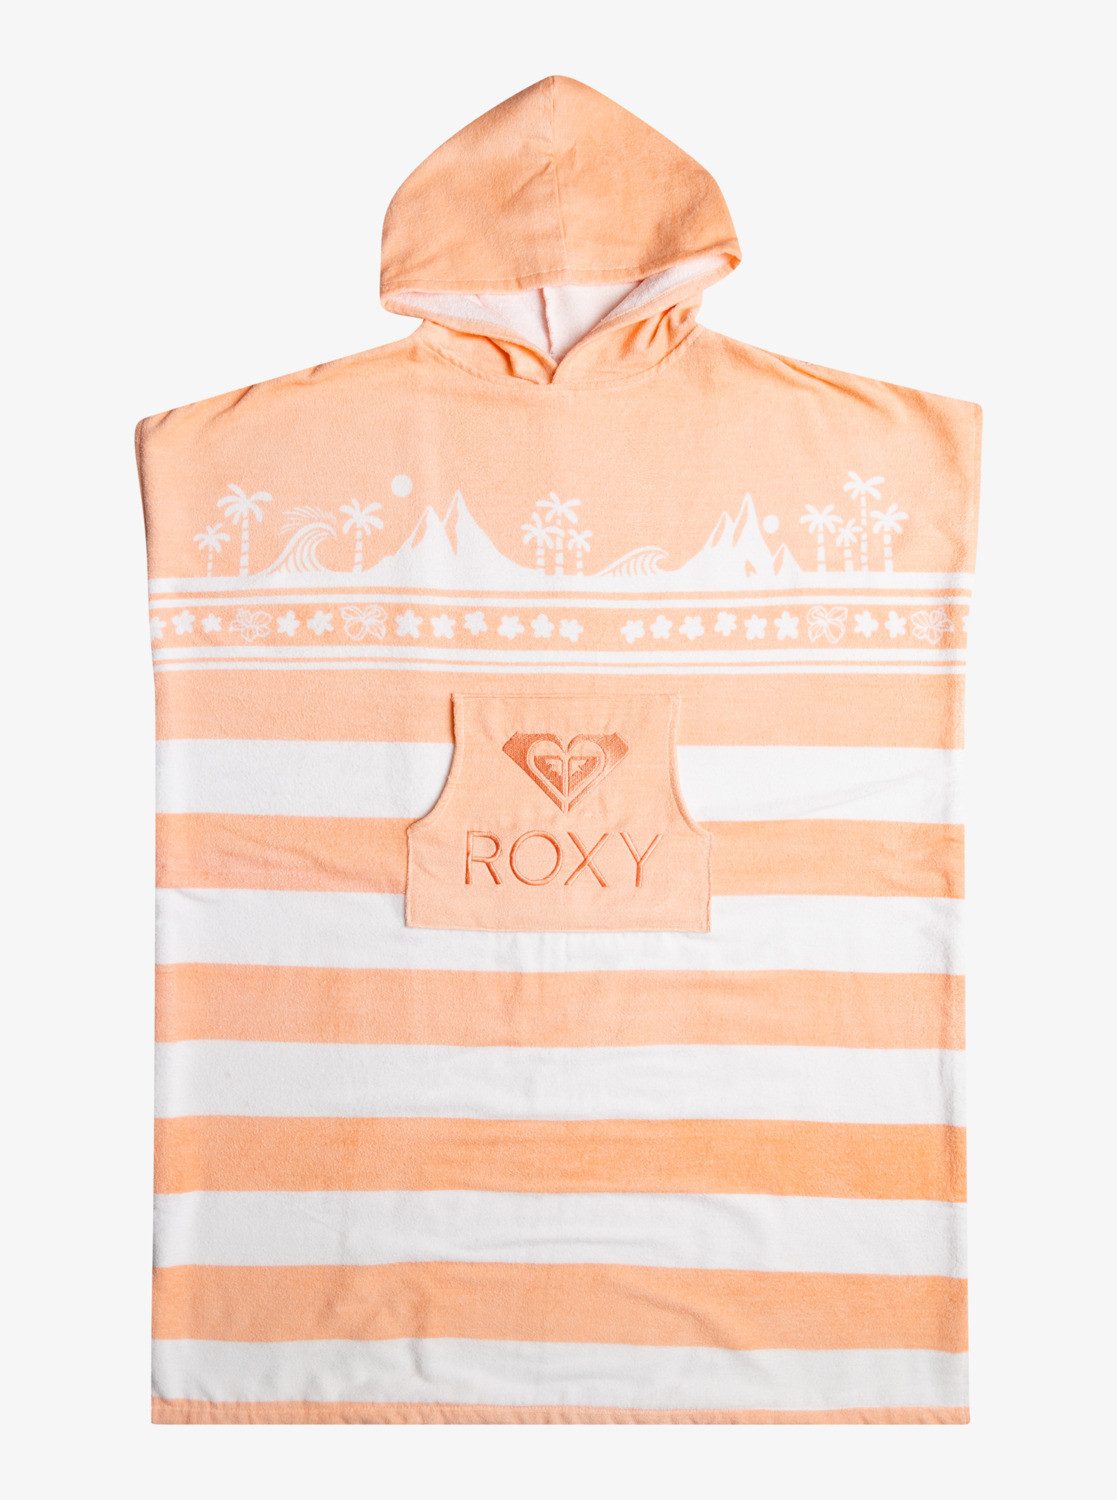 Roxy Badeponcho Warmy Sunset - Poncho Handtuch für Frauen